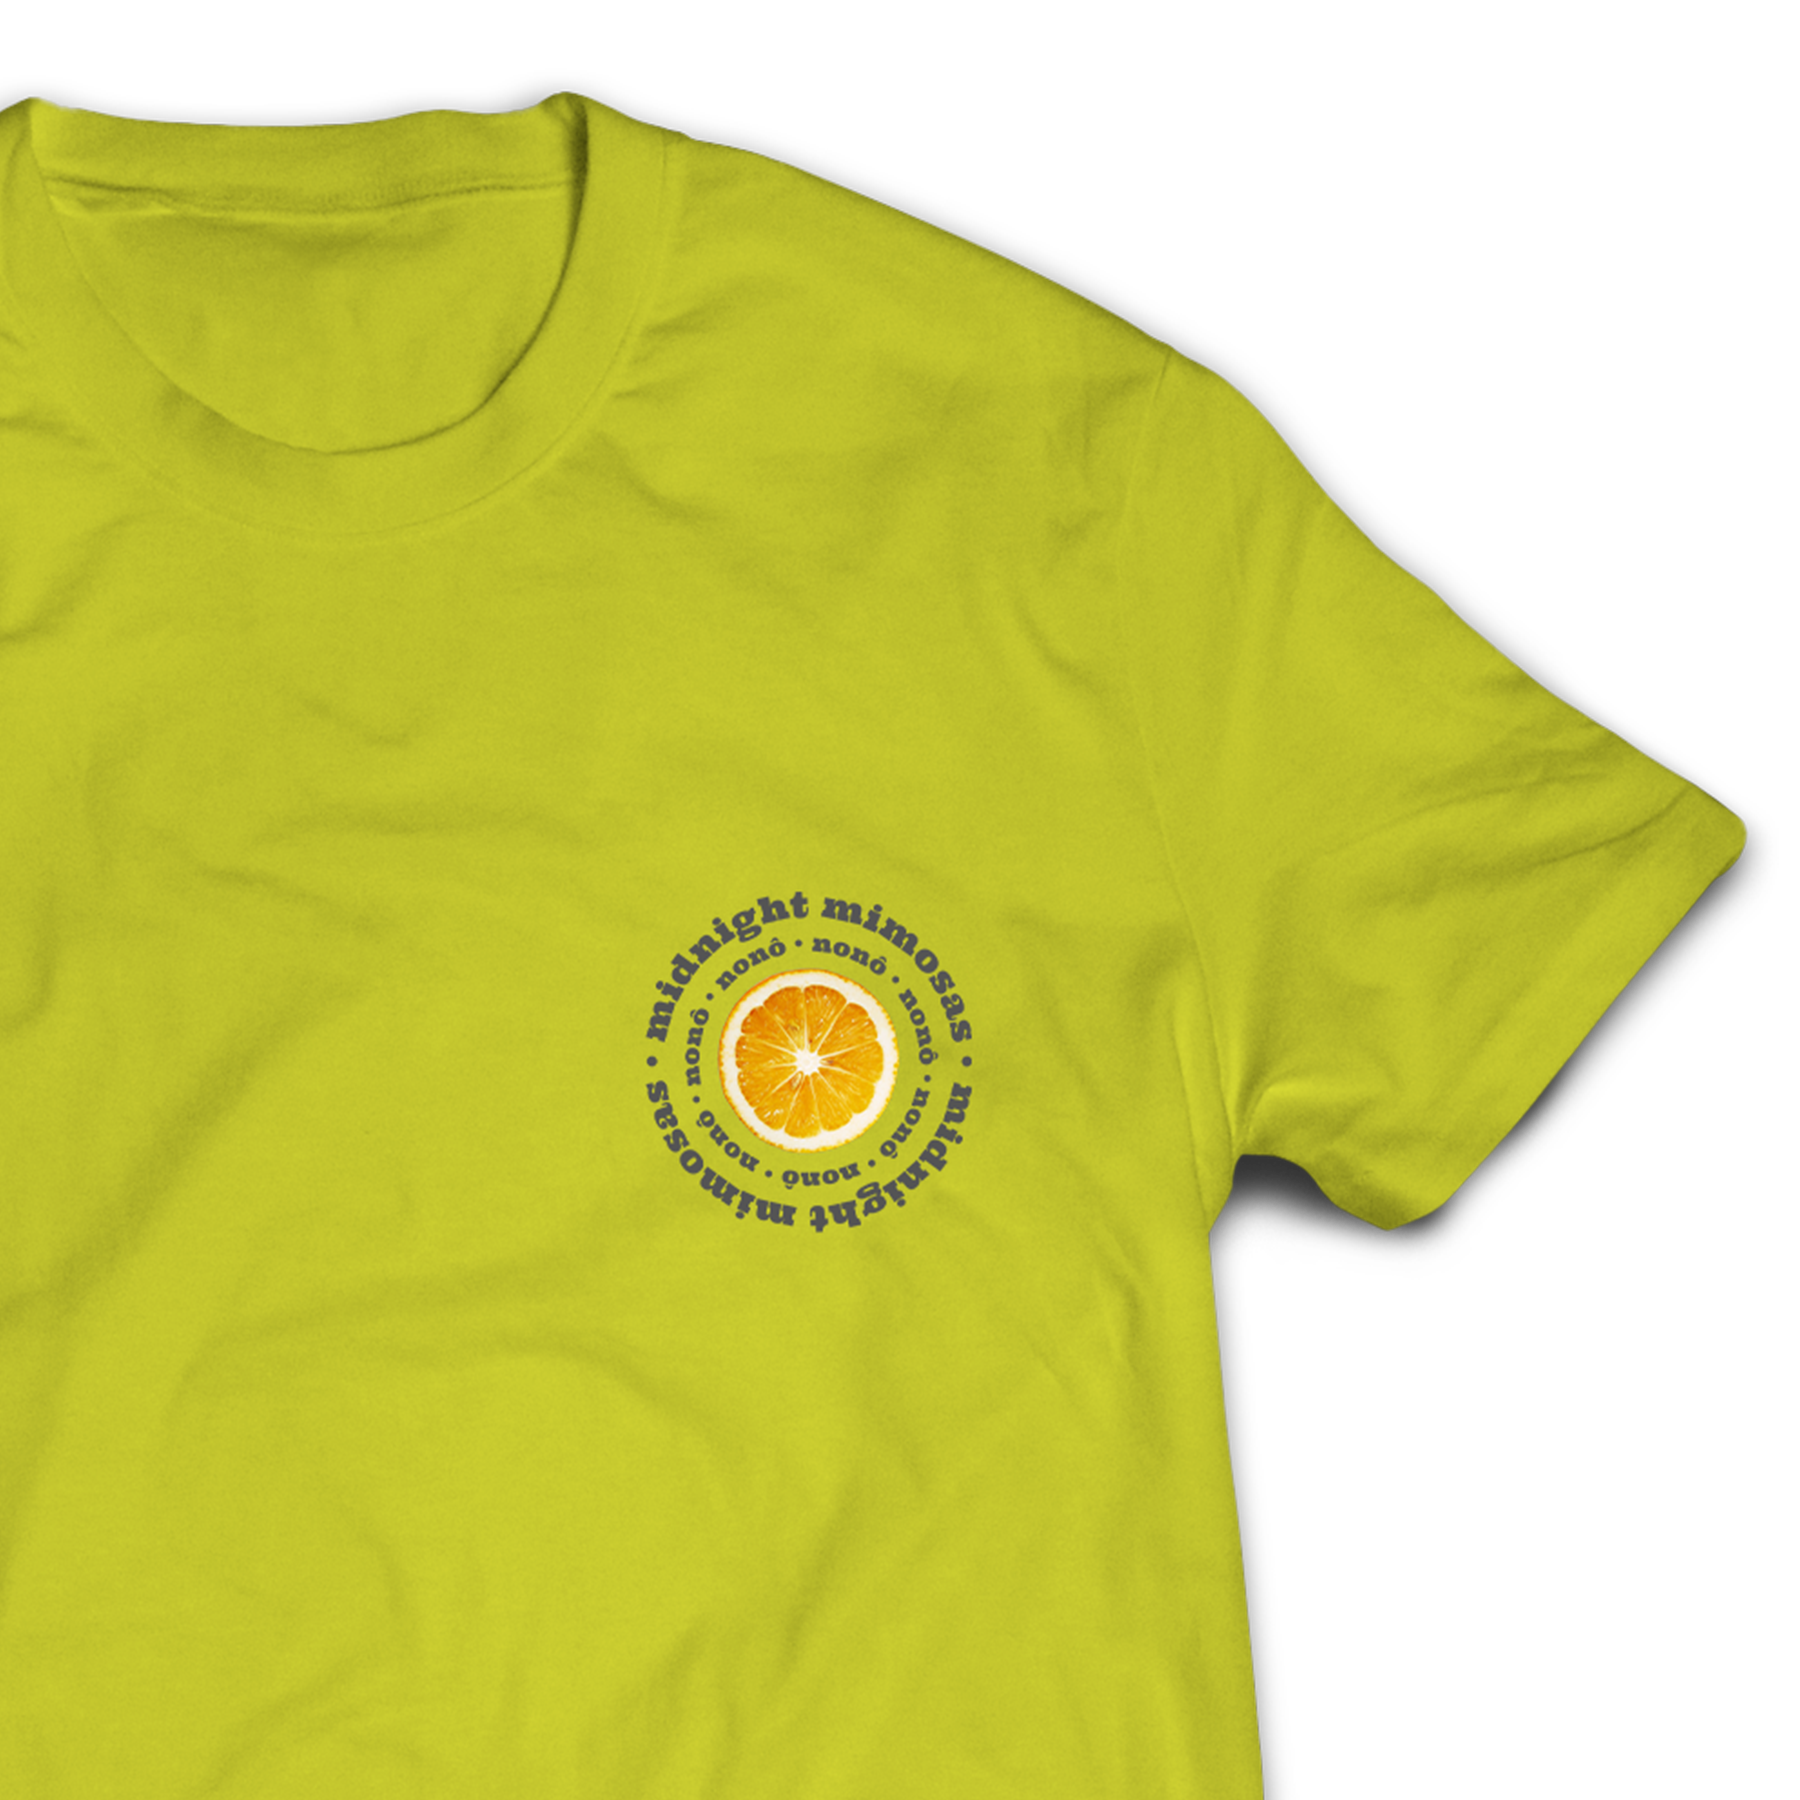 Midnight Mimosas - T-shirt (Safety Green)